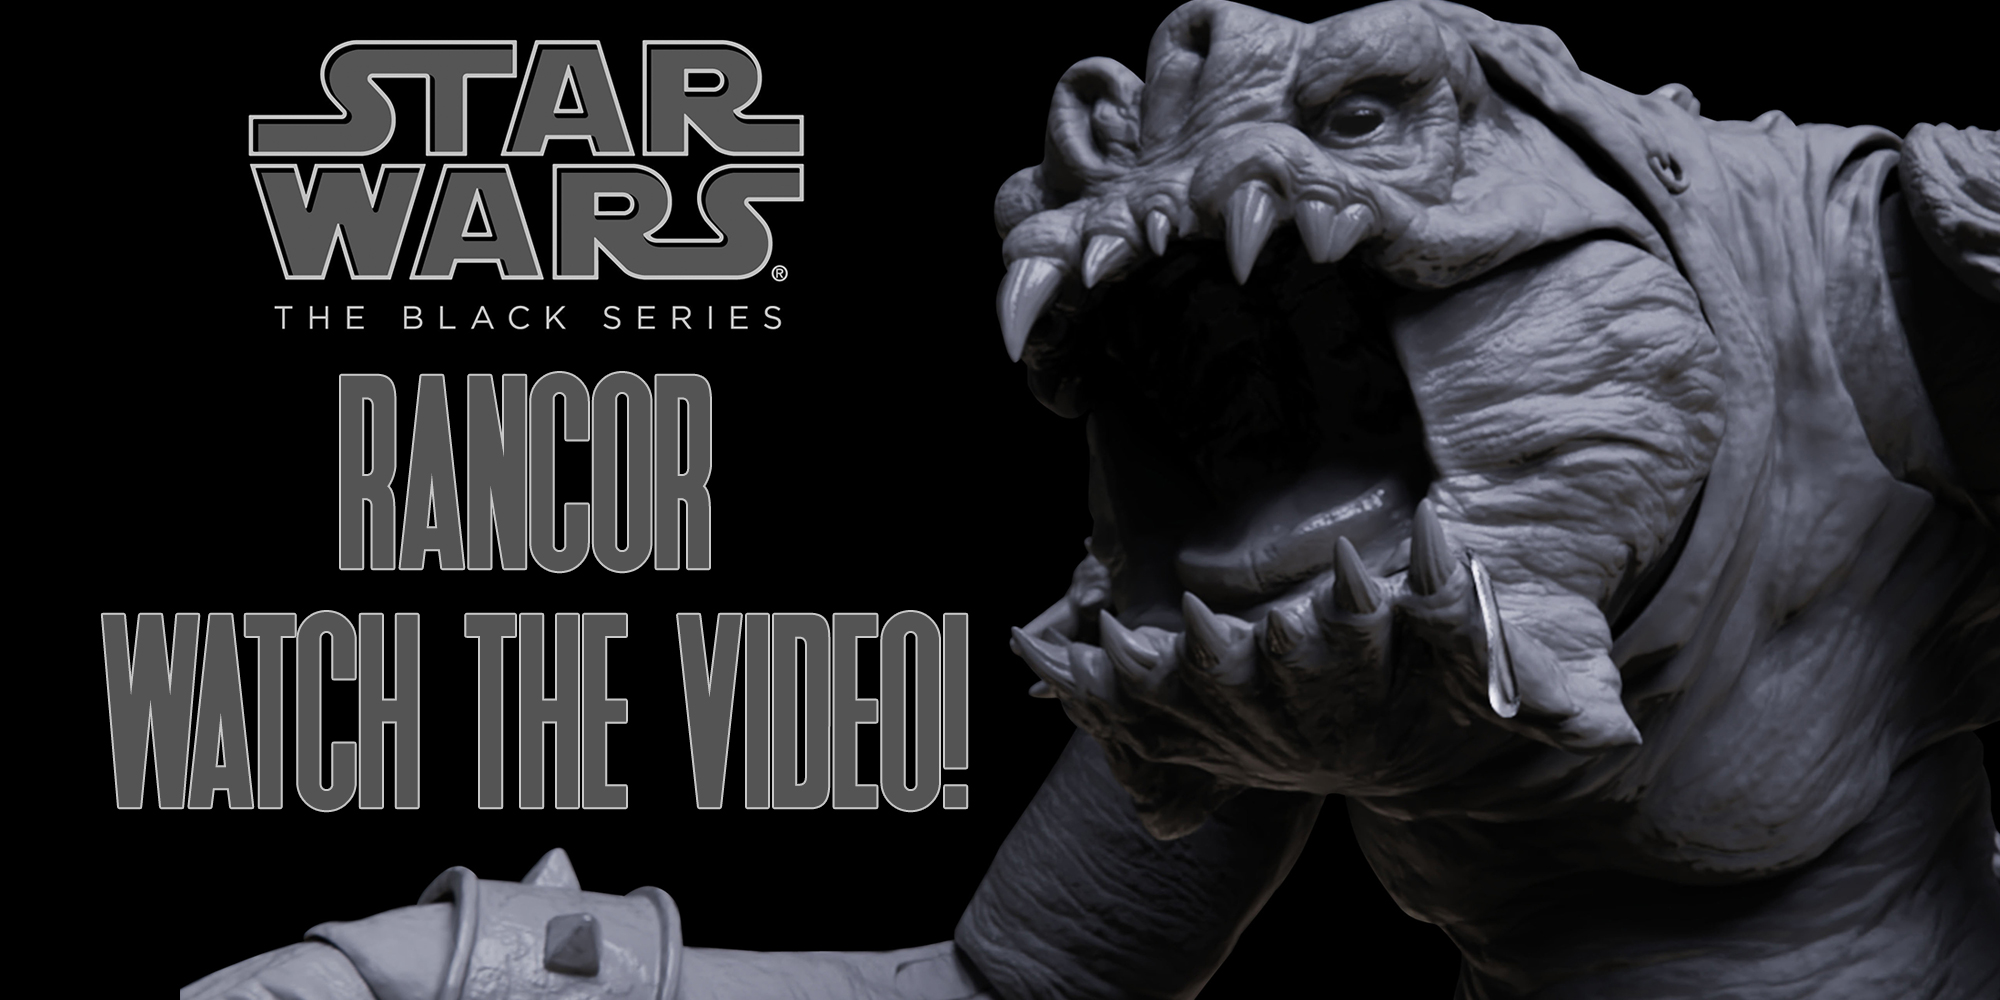 Black Series Rancor - Watch The Video!